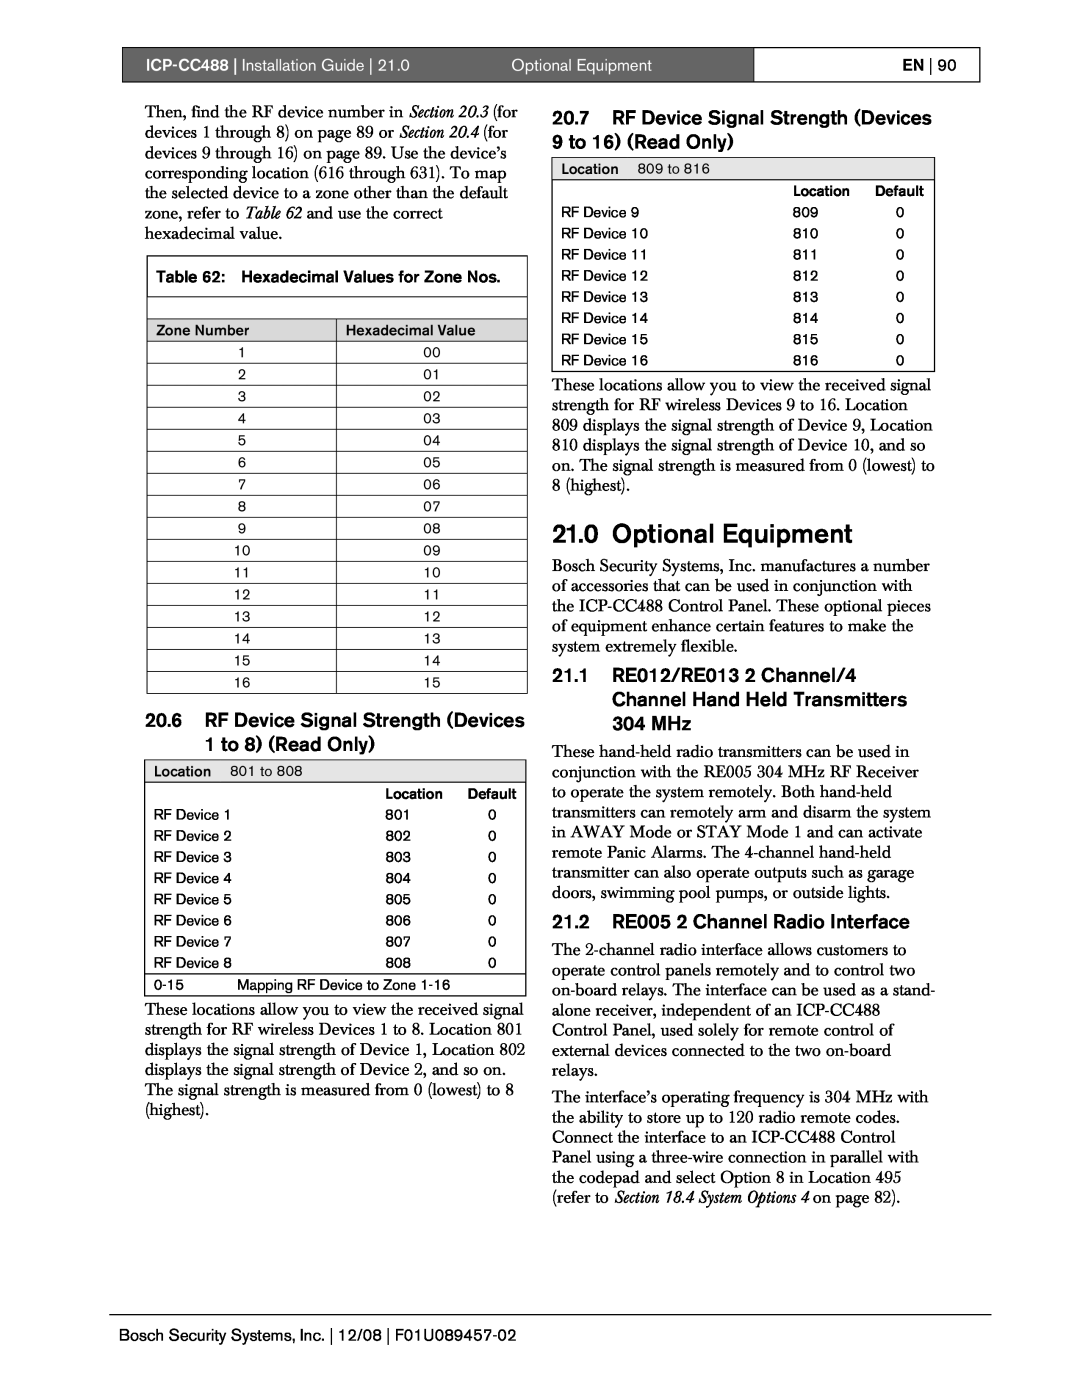 Bosch Appliances ICP-CC488 manual Optional Equipment 